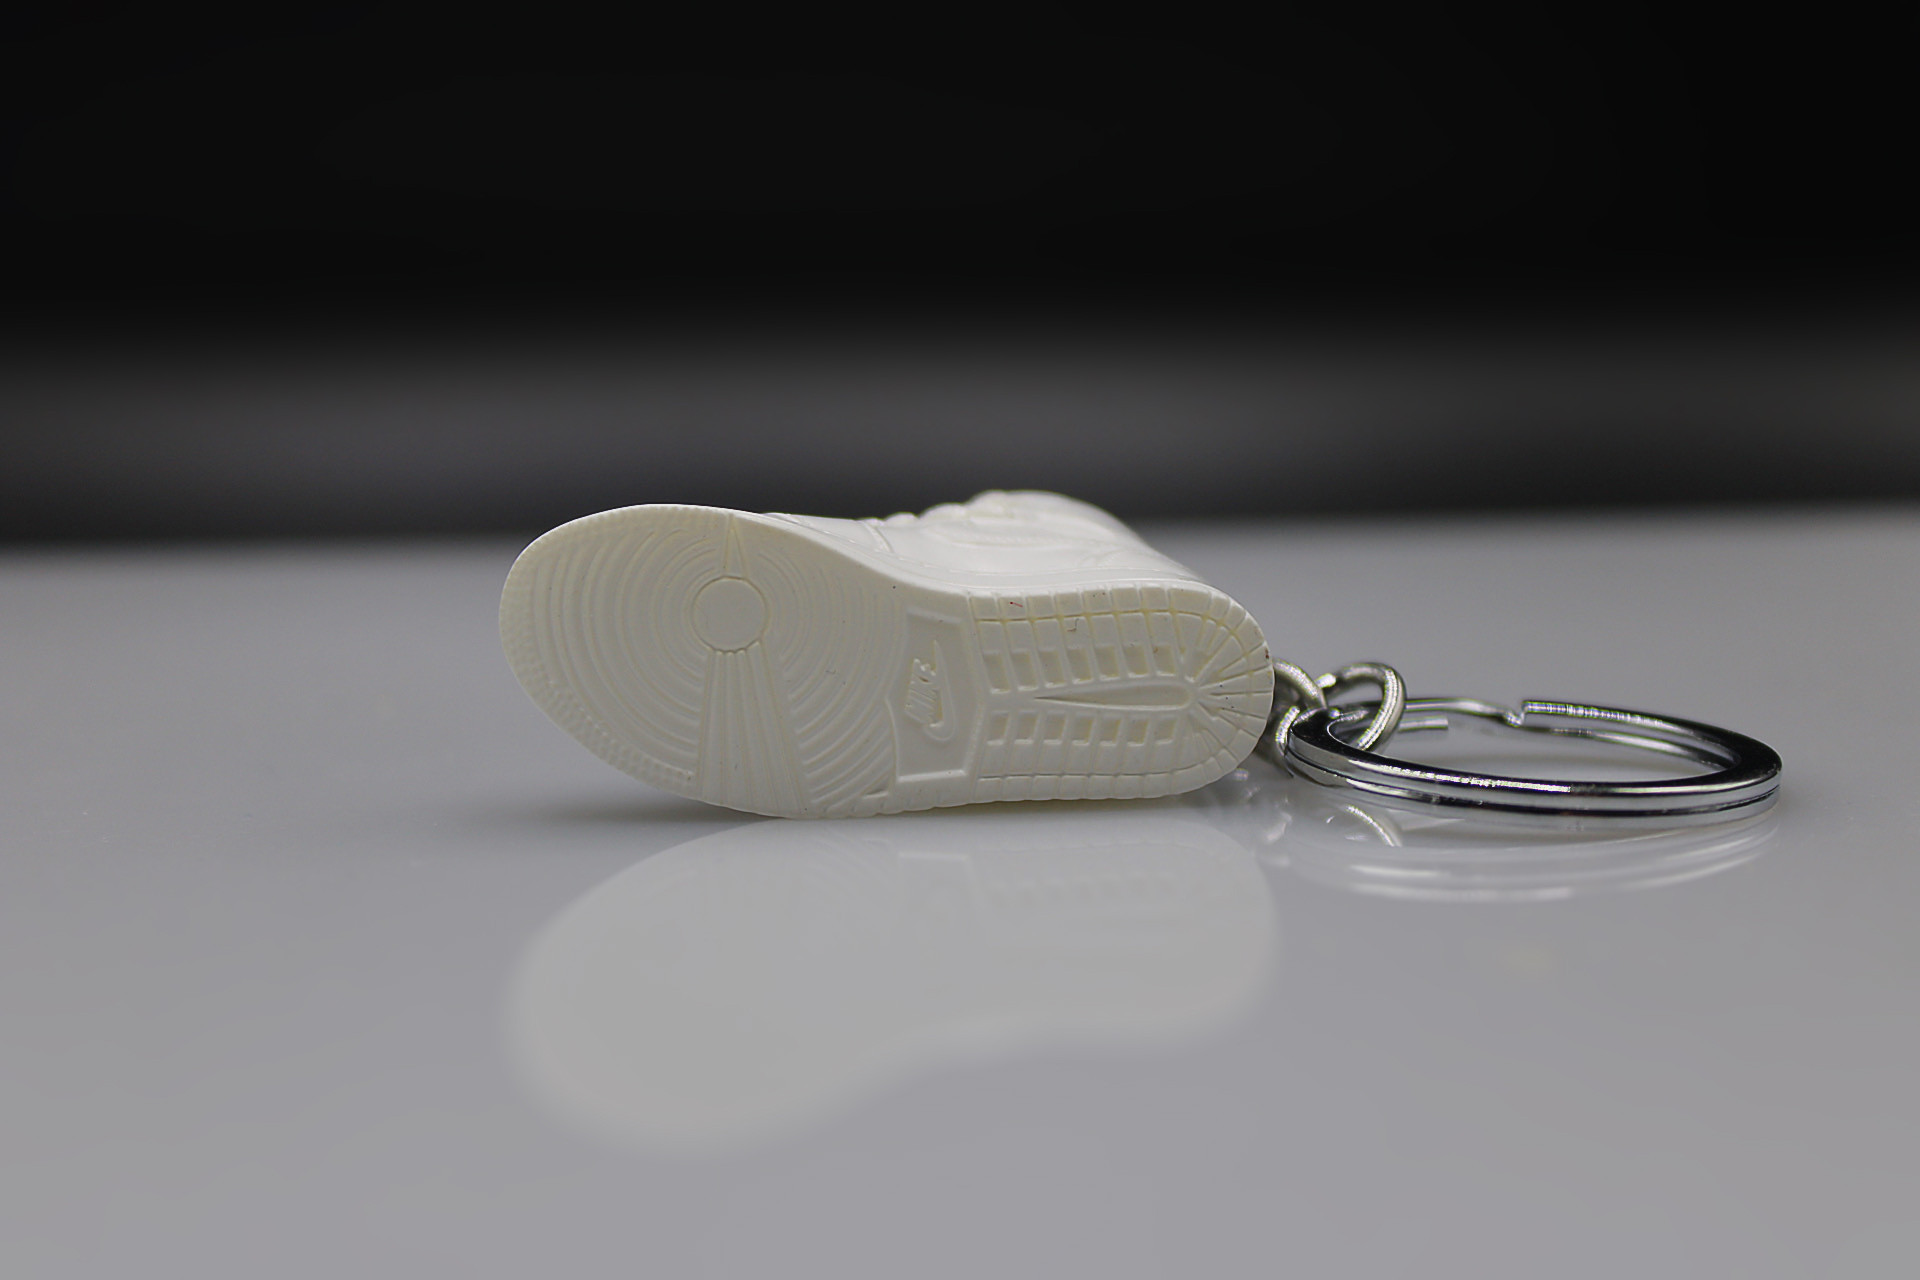 Porte-clés Sneakers 3D - Air Jordan 1 - Blanche